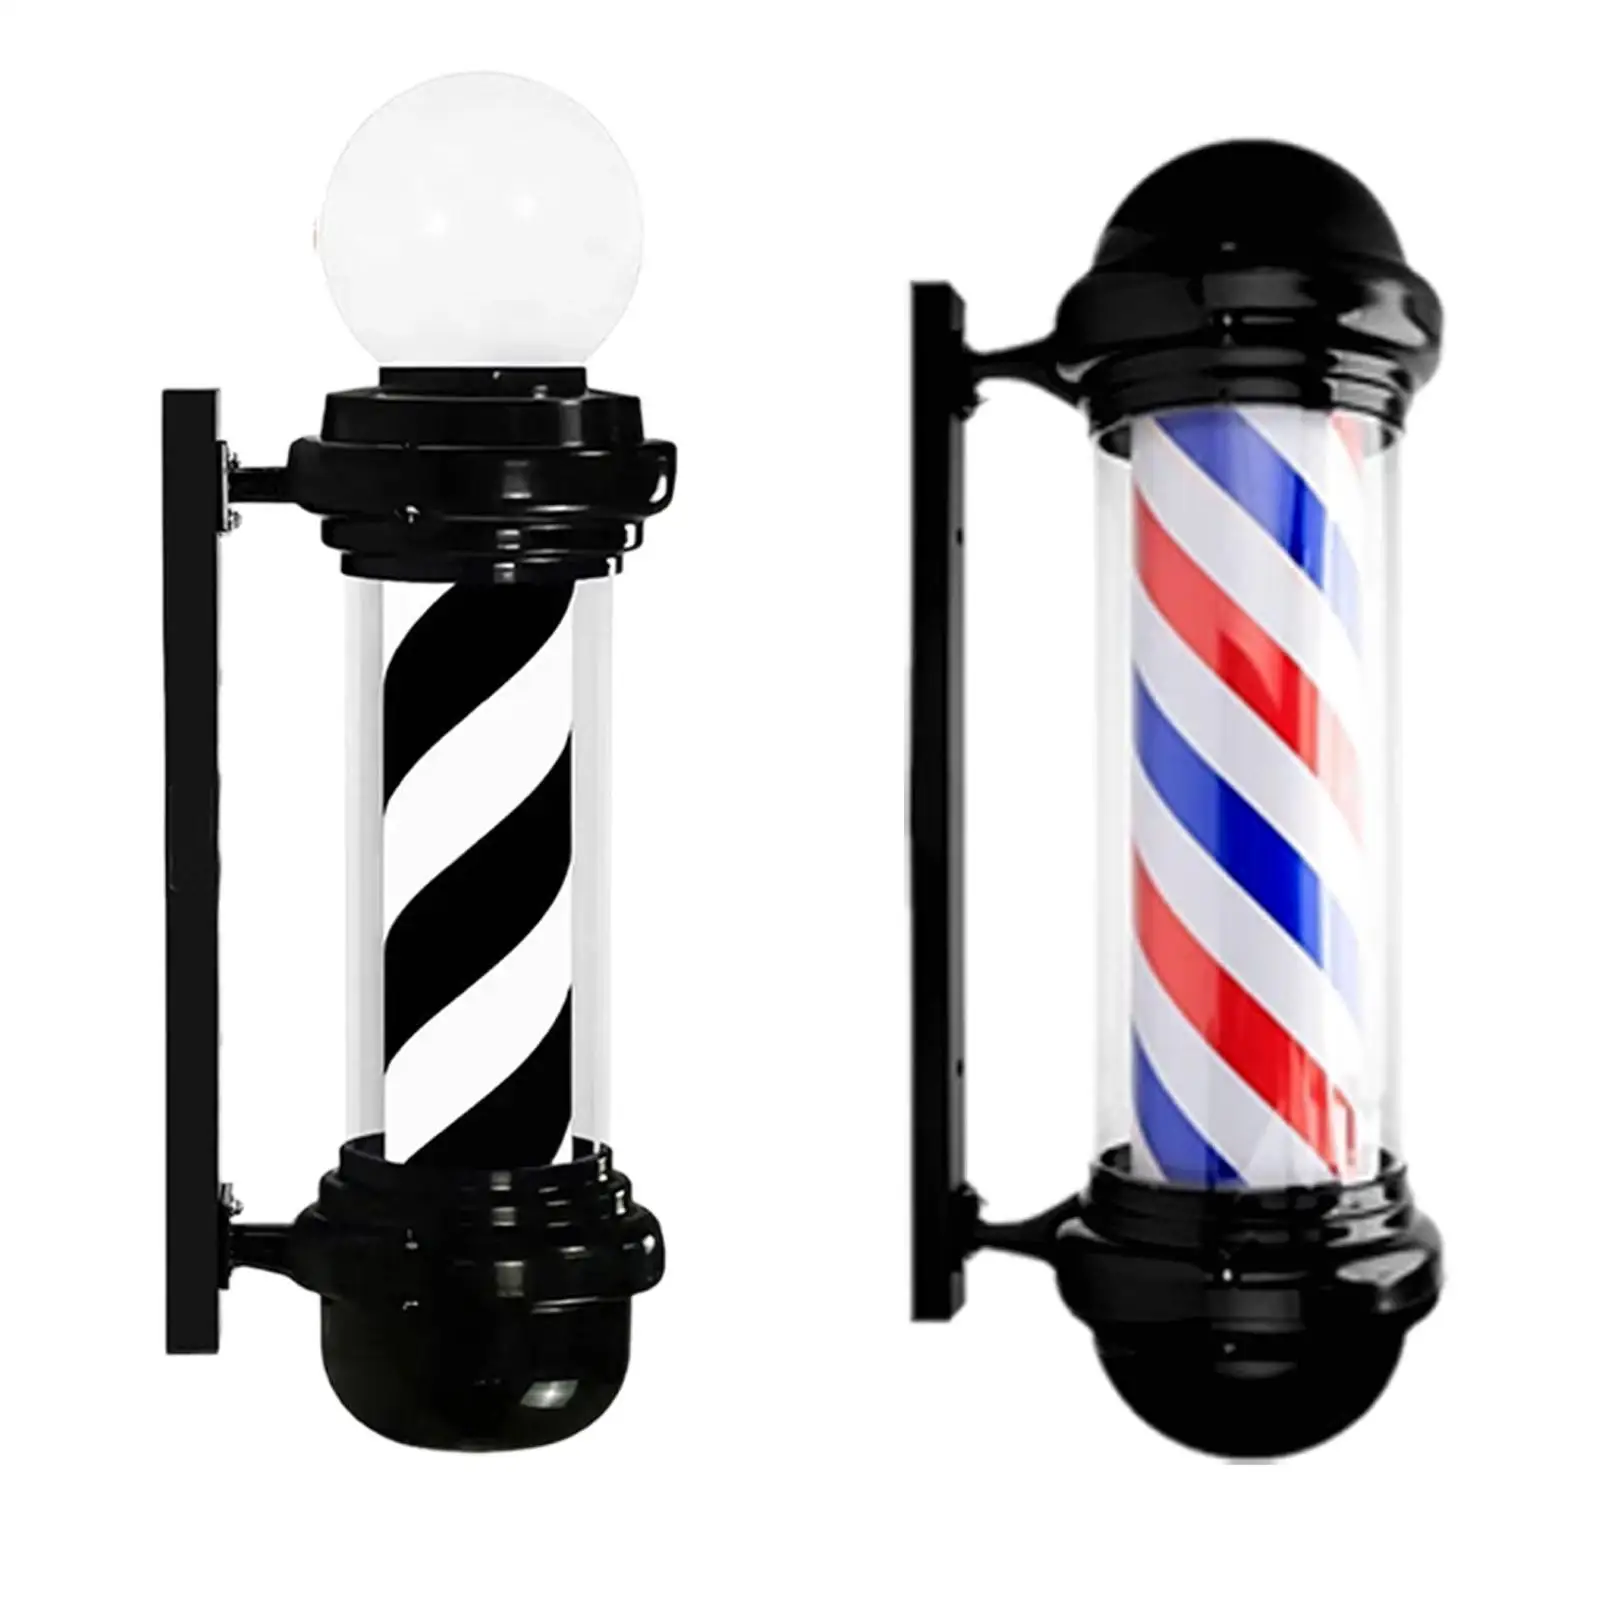 barber-pole-light-hair-salon-signage-light-for-barbershop-hair-salon-outdoor